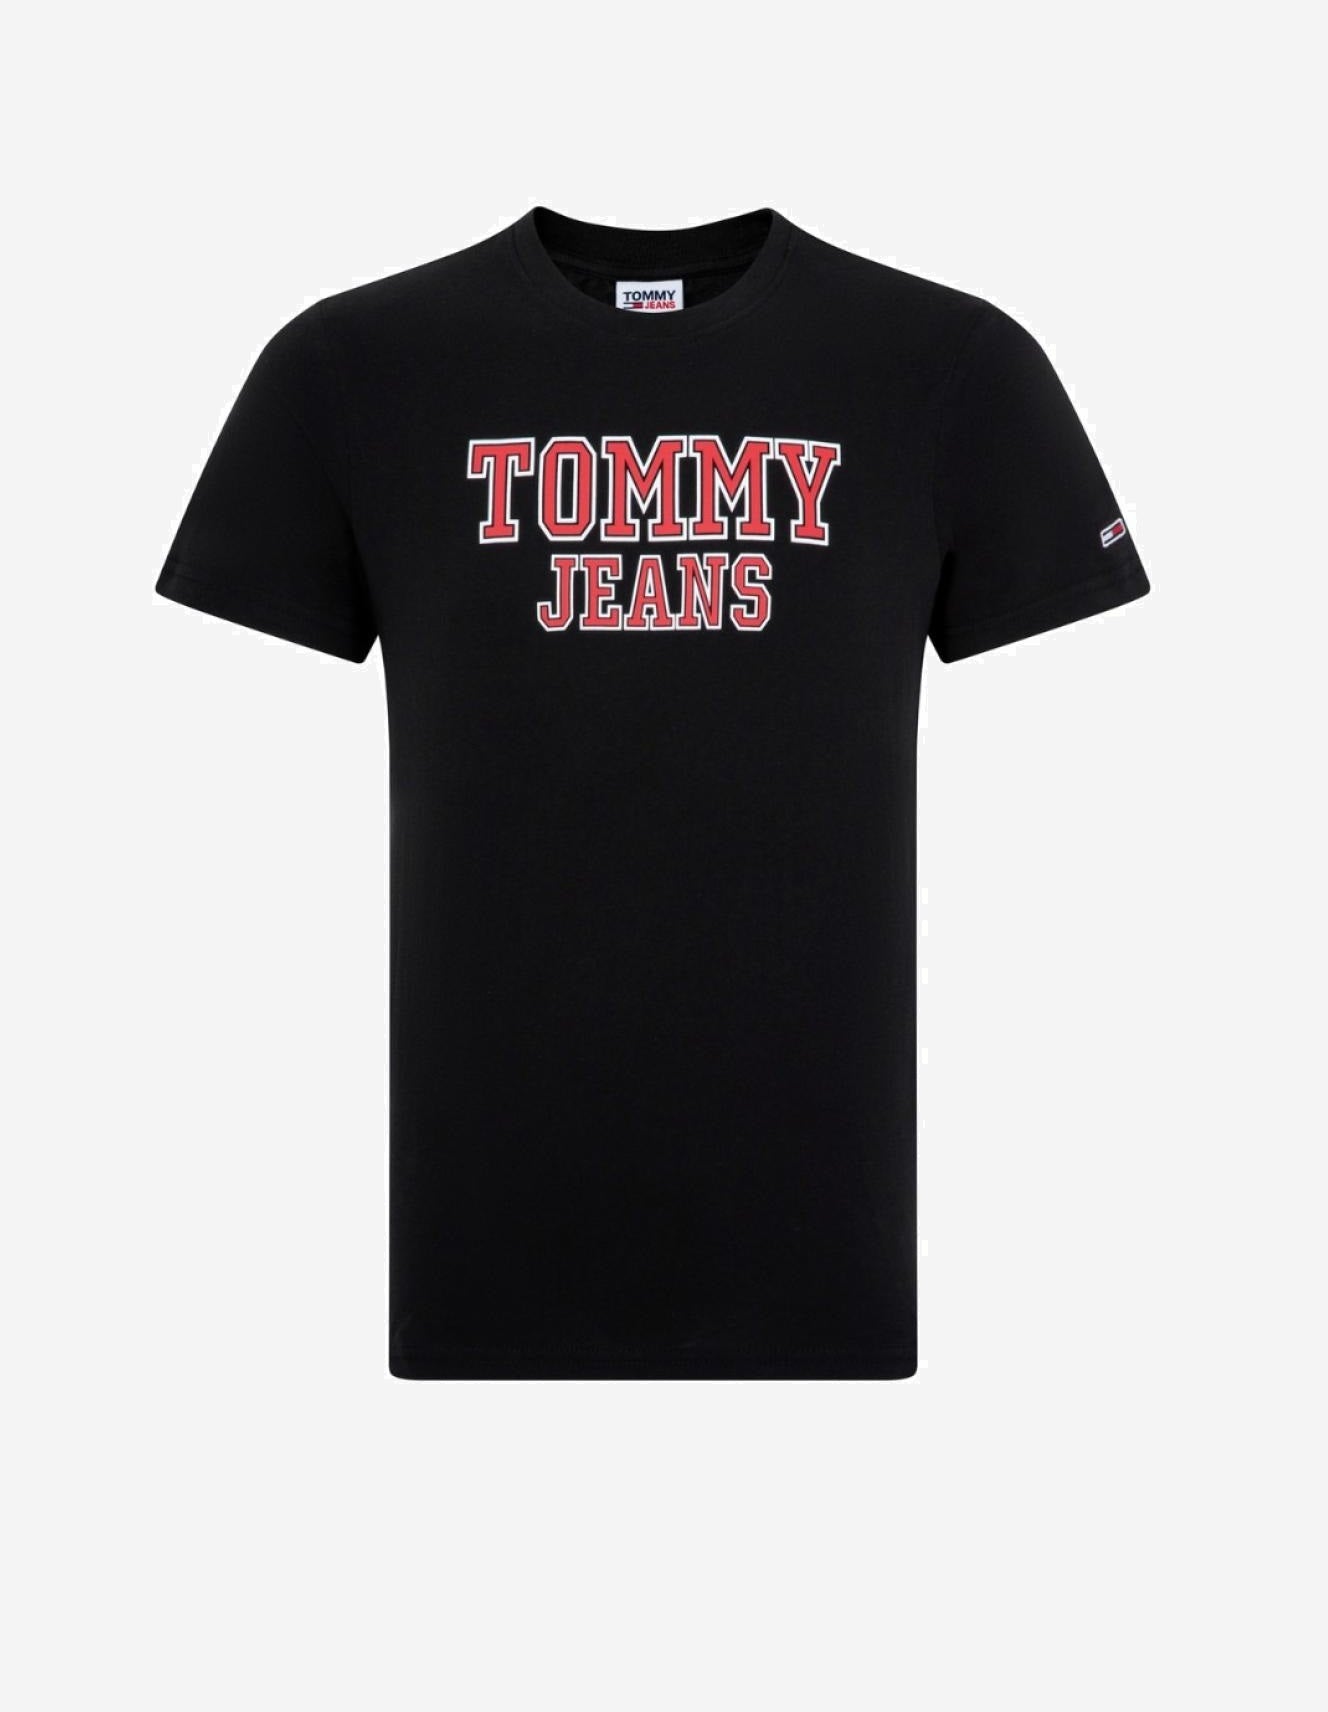 camiseta negra TOMMY HILFIGER hombre